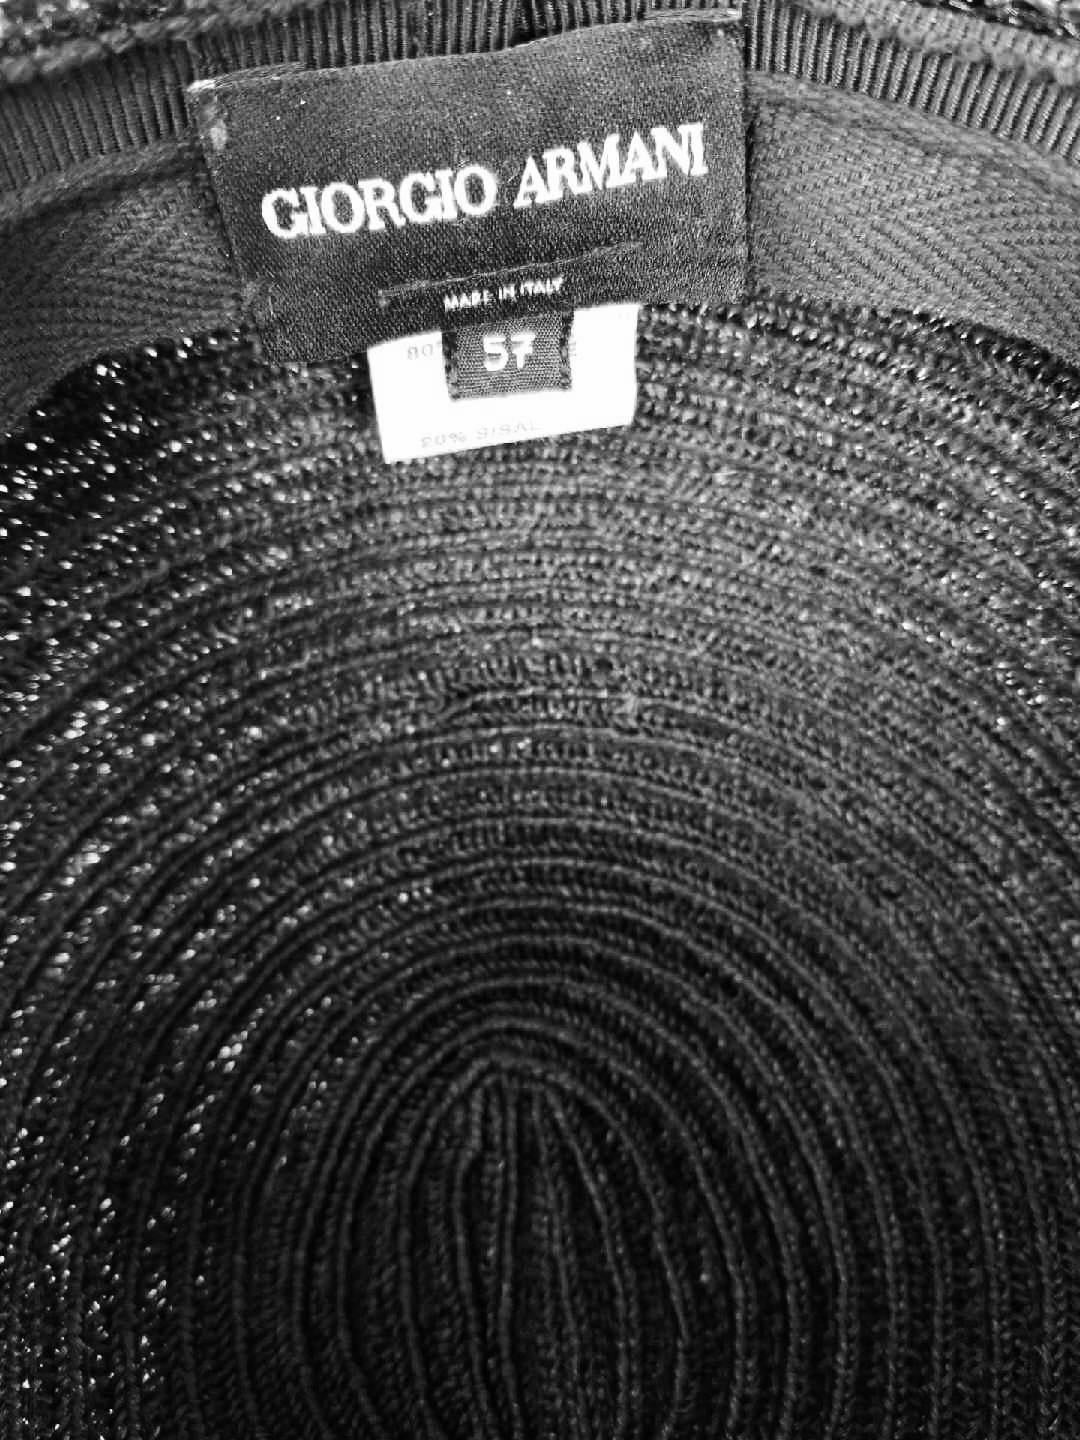  Vintage Giorgio Armani Black Sculptural  Wide Brim Eye Hat  1